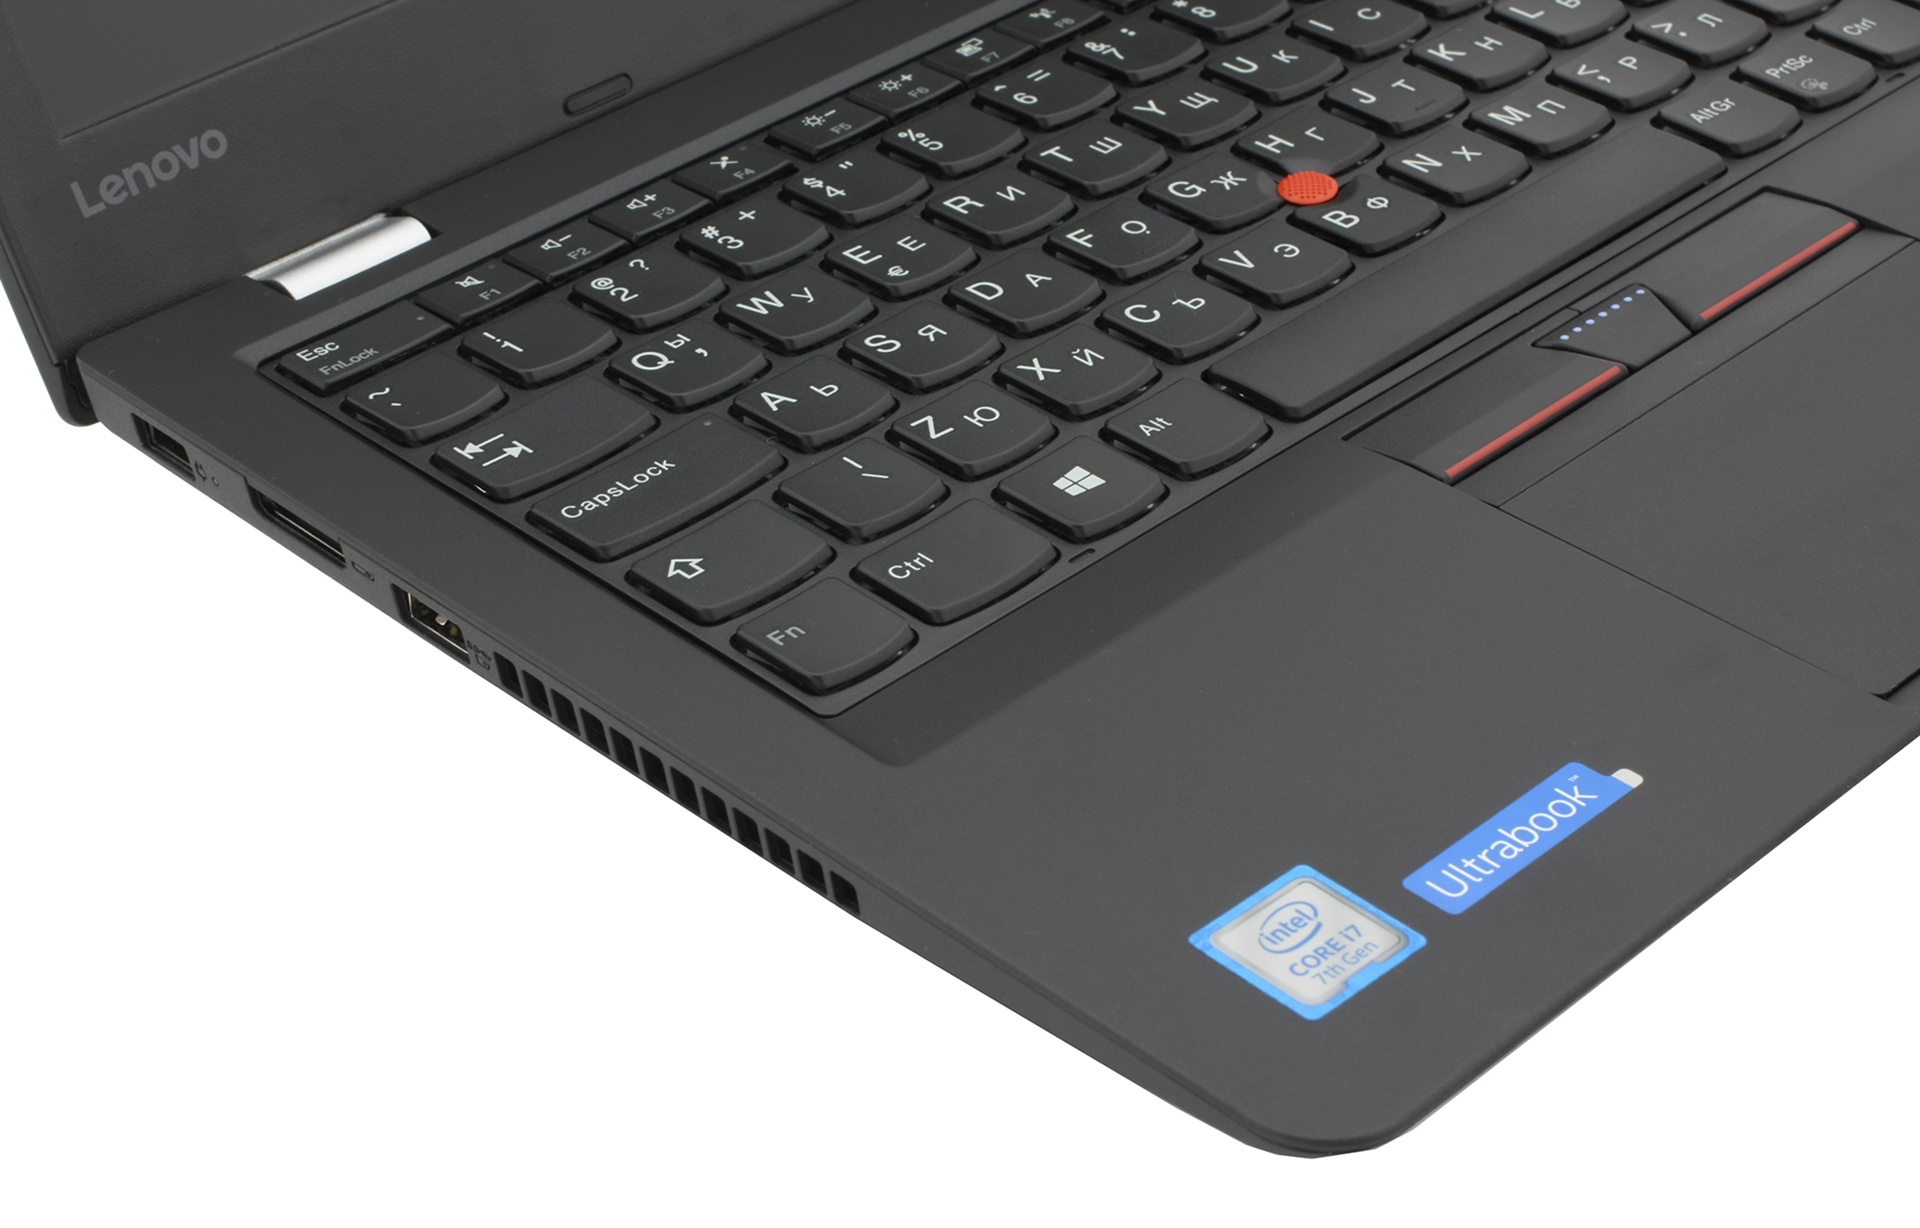 Lenovo ThinkPad 13 Gen 2 review - a ThinkPad-branded 13-inch